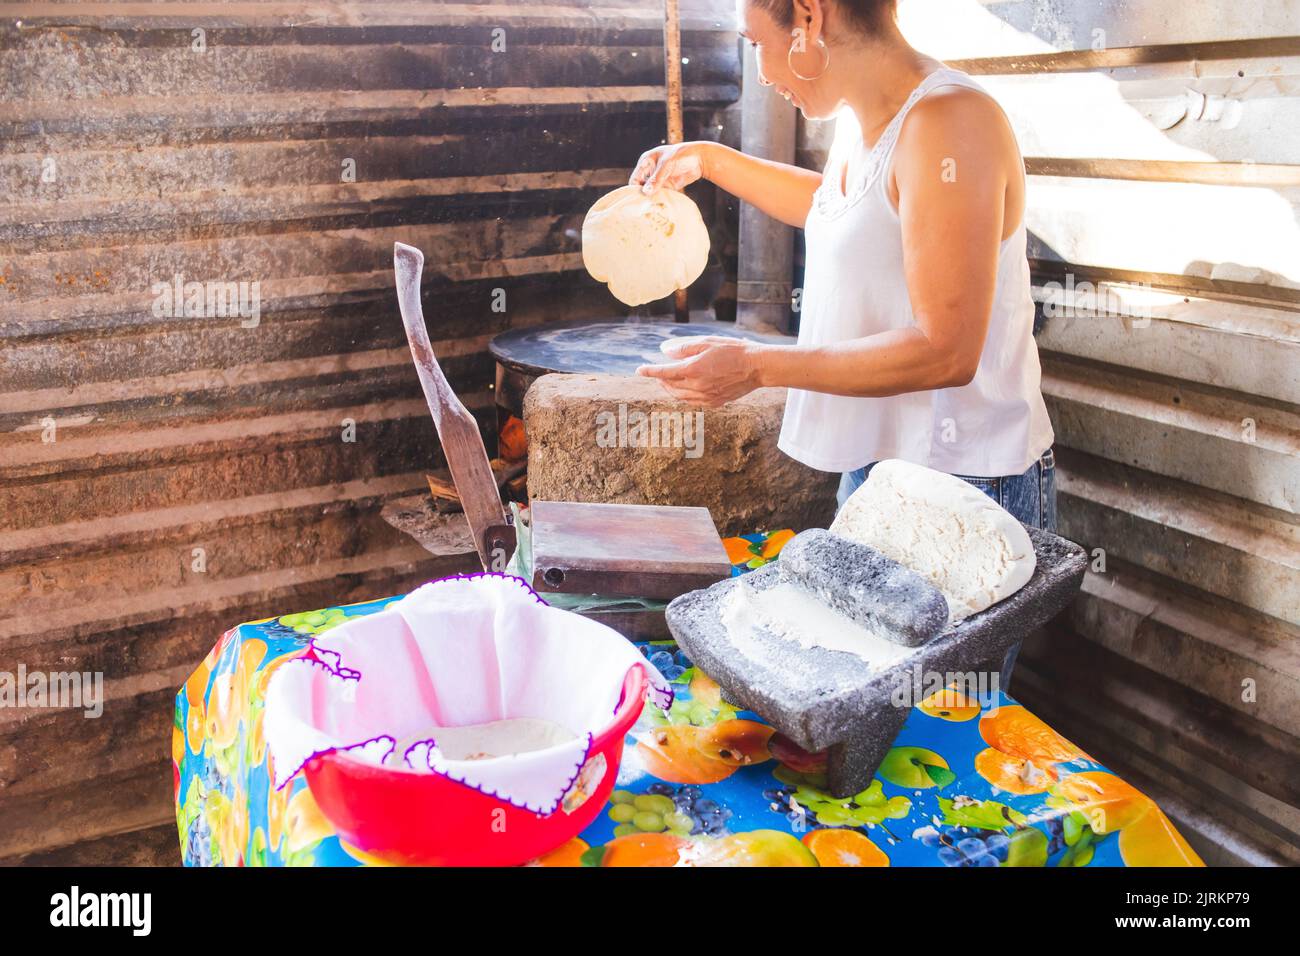 https://c8.alamy.com/comp/2JRKP79/a-hispanic-woman-cooking-corn-dough-on-a-stove-making-homemade-tortillas-2JRKP79.jpg